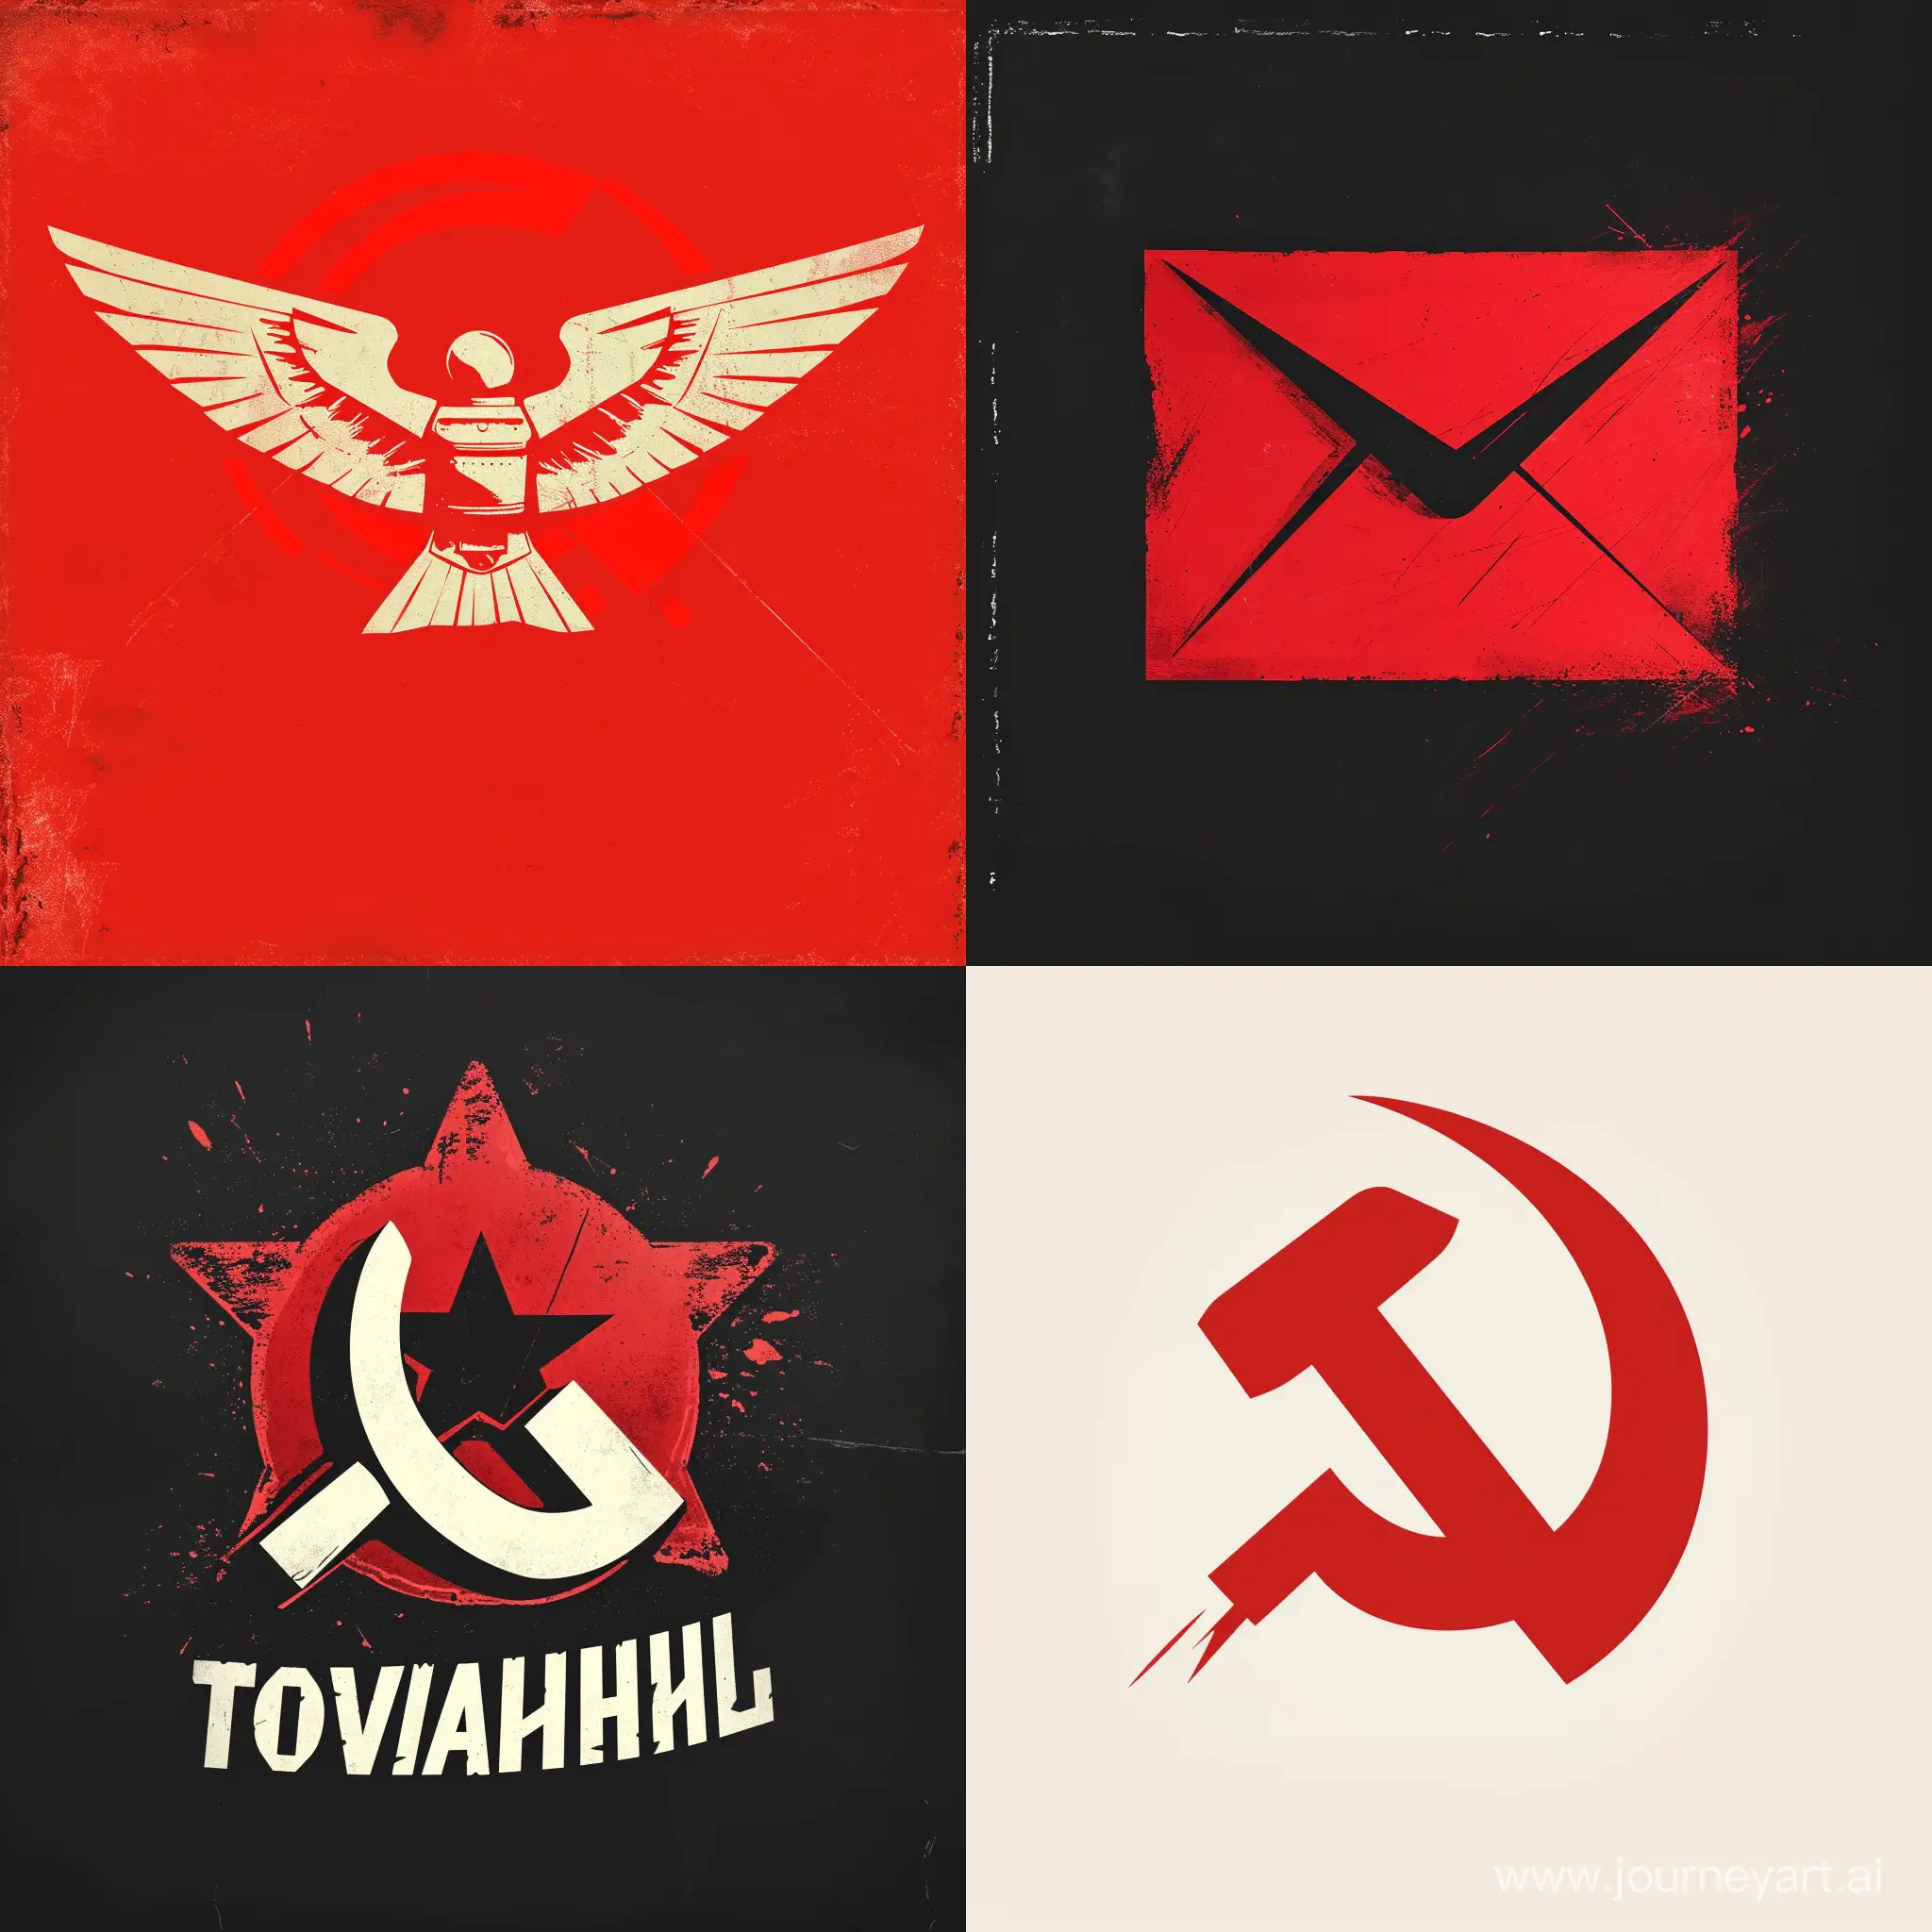 logo for soviet era messanger called tovarischi